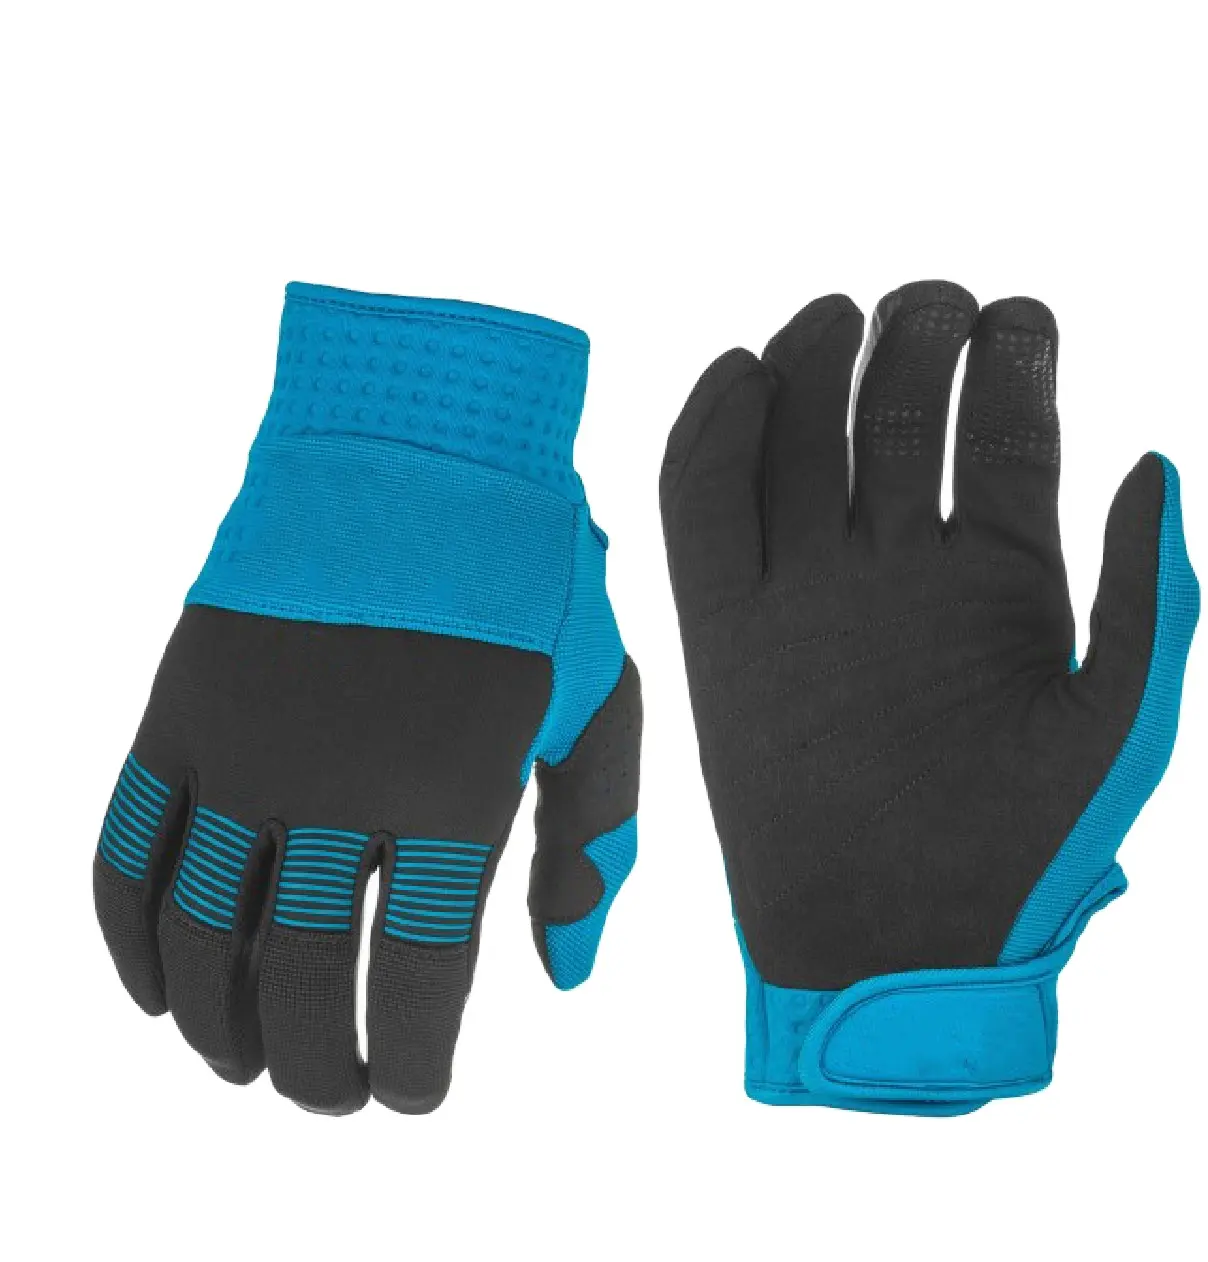 Best selling all season wear Motocross Racing Gloves Screen Motorcycle Full Finger Racing Gloves for Pro biker